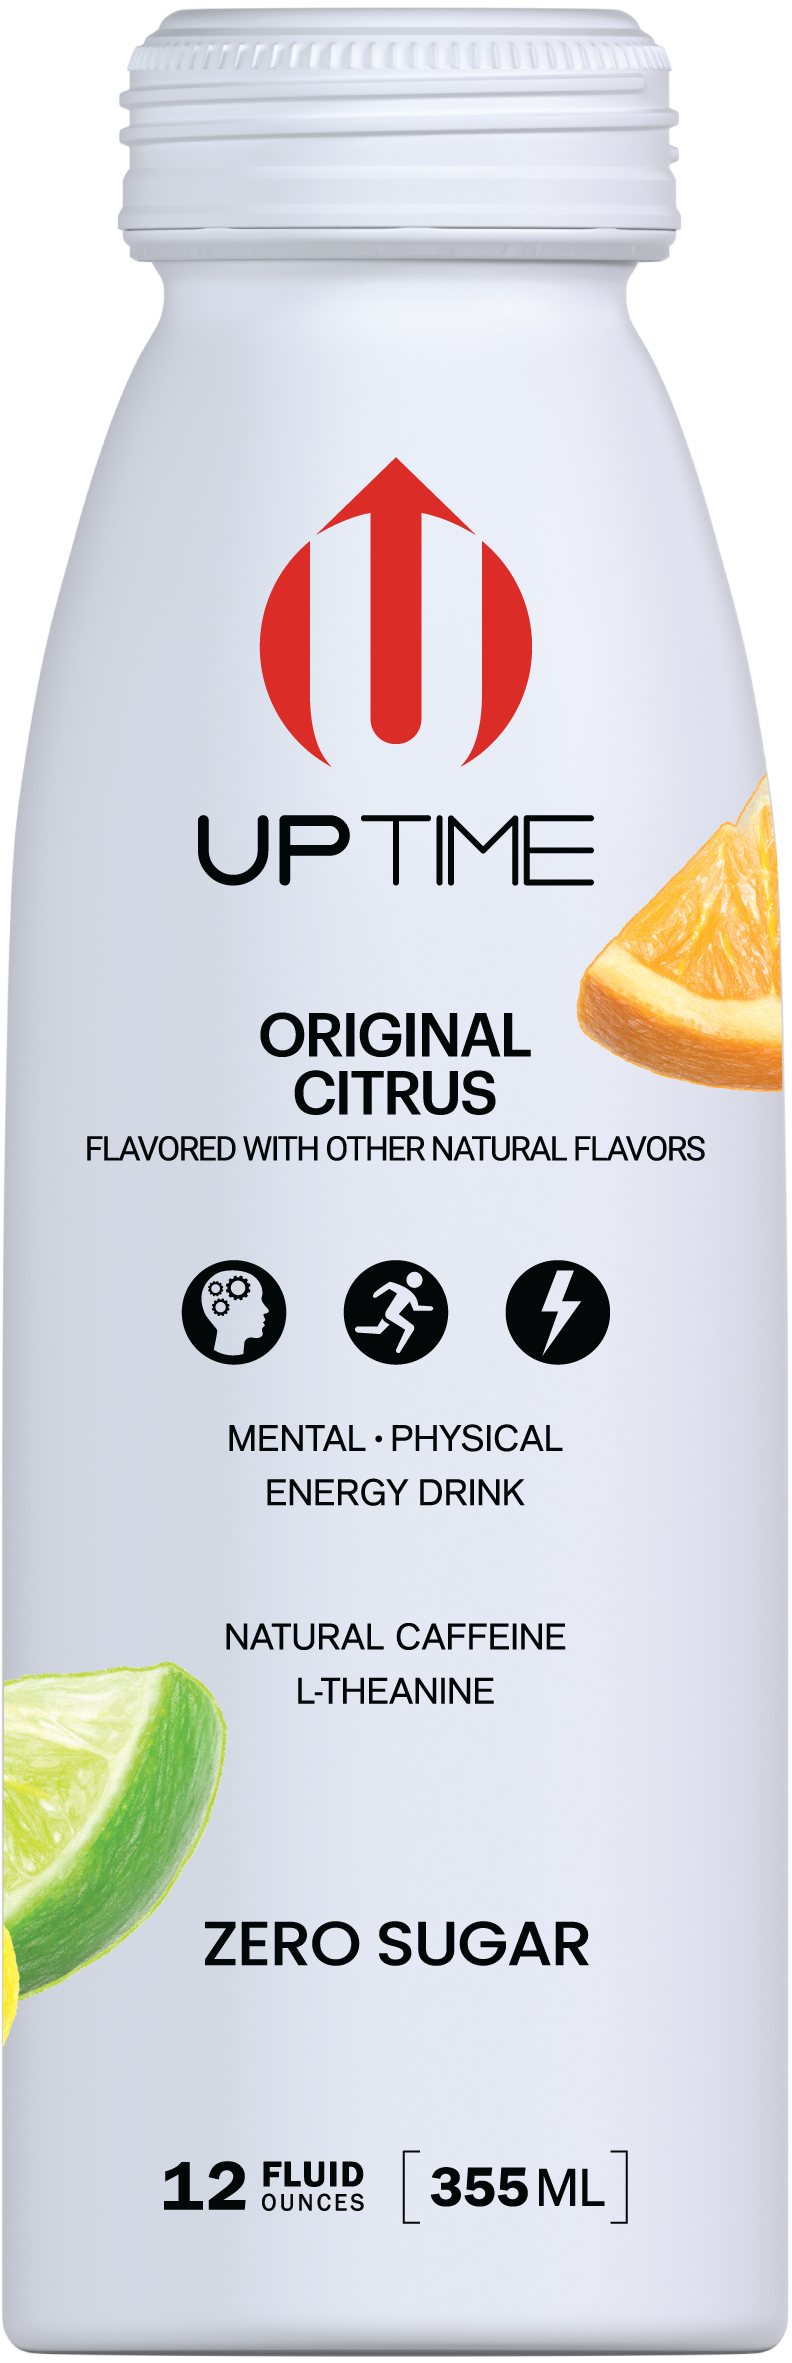 UPTIME Premium Energy Drink, Original Citrus - Sugar Free, 12oz Bottles - Multi Pack